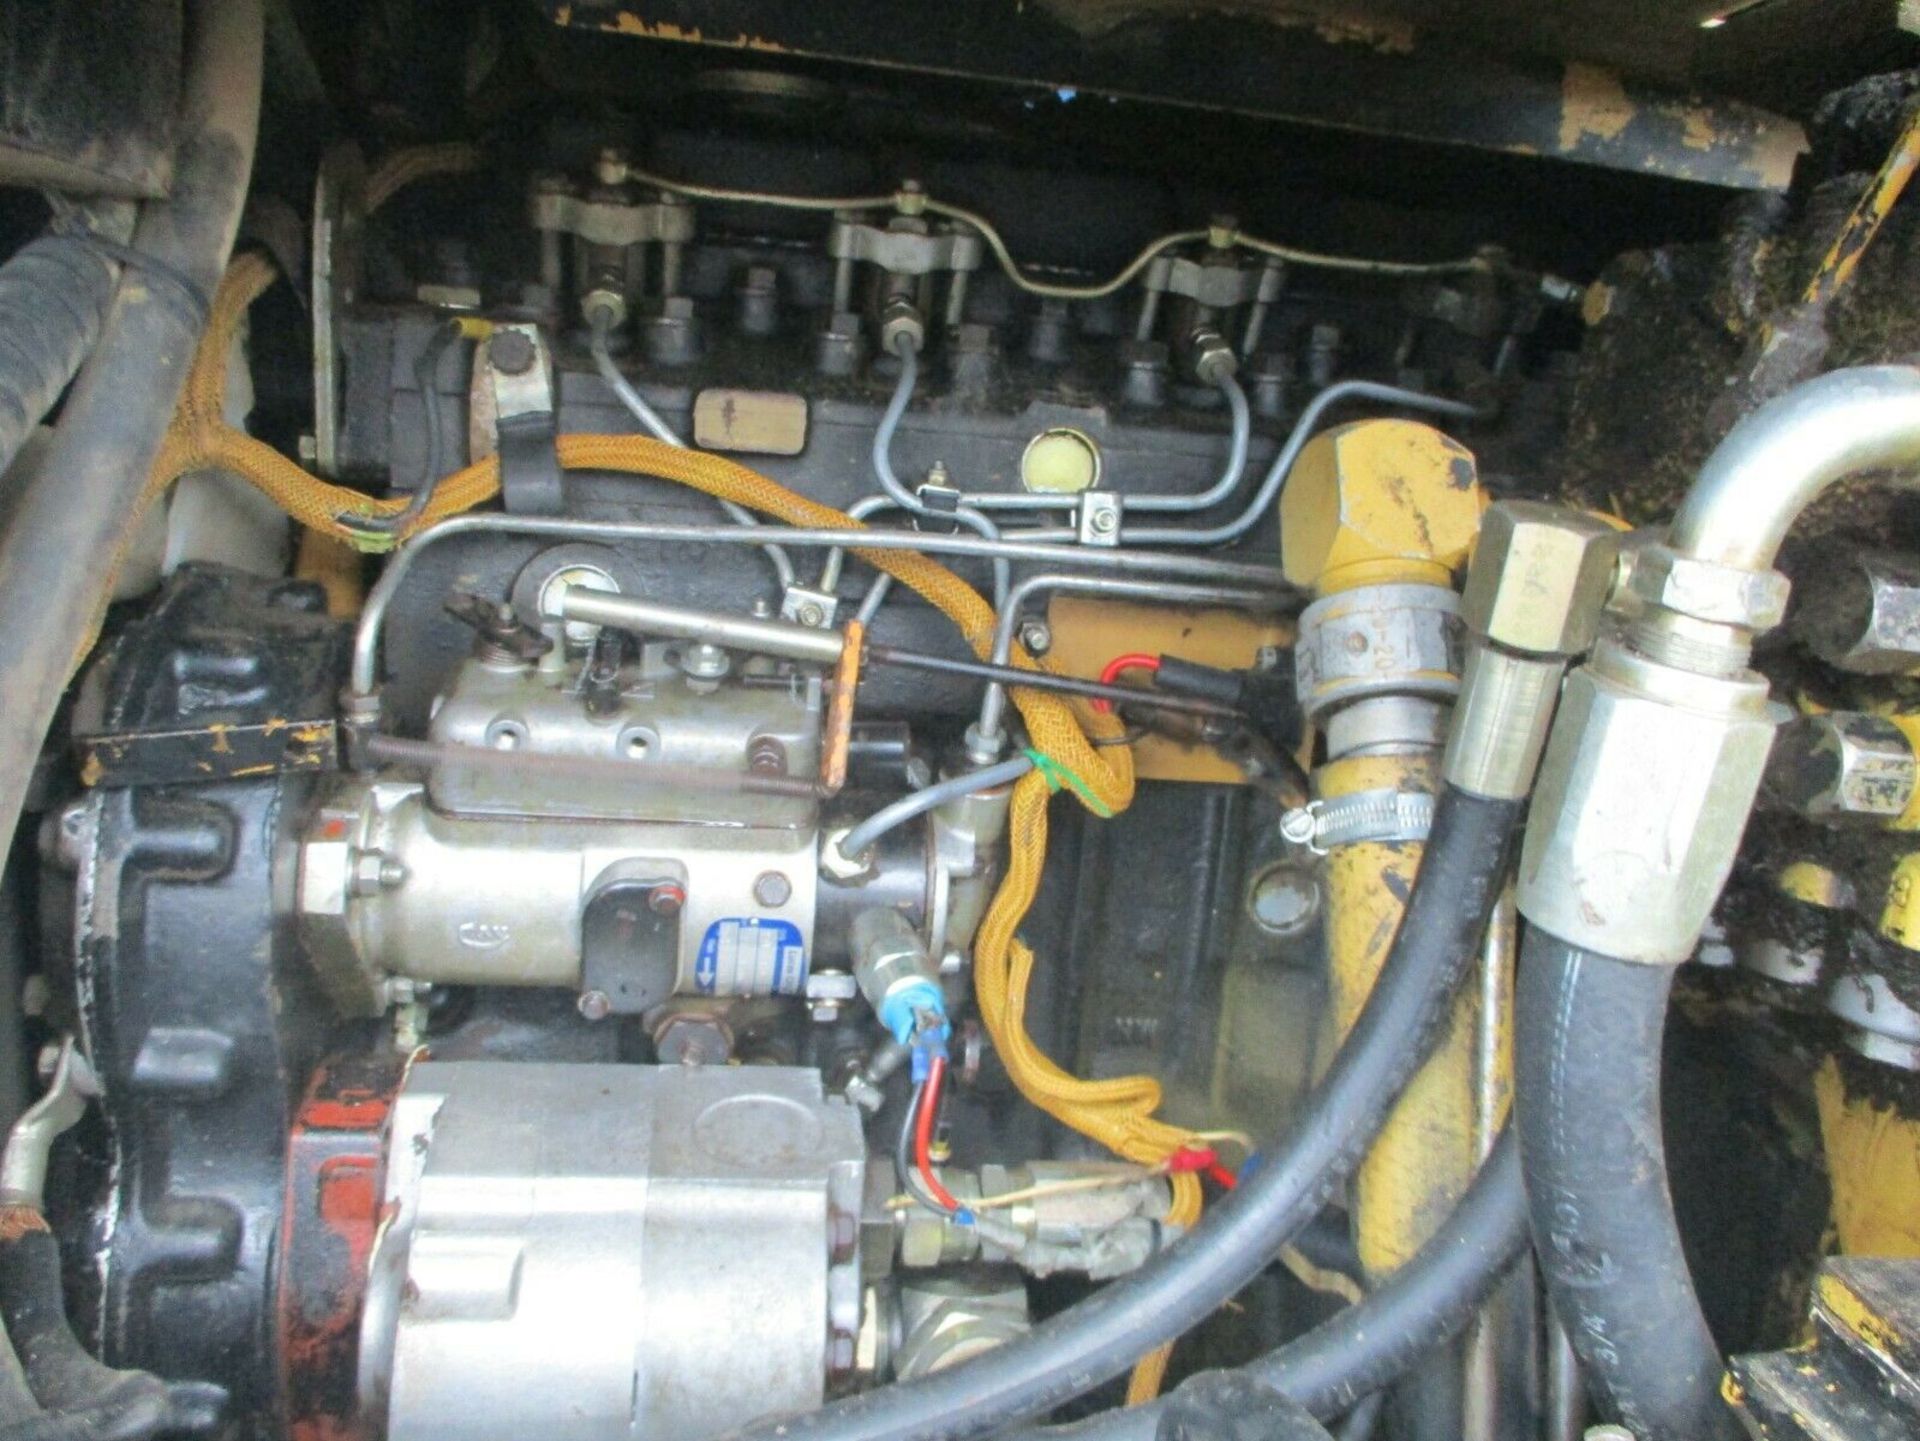 CAT V80 E fork lift diesel 3.6 ton Perkins 4 engin - Image 11 of 12